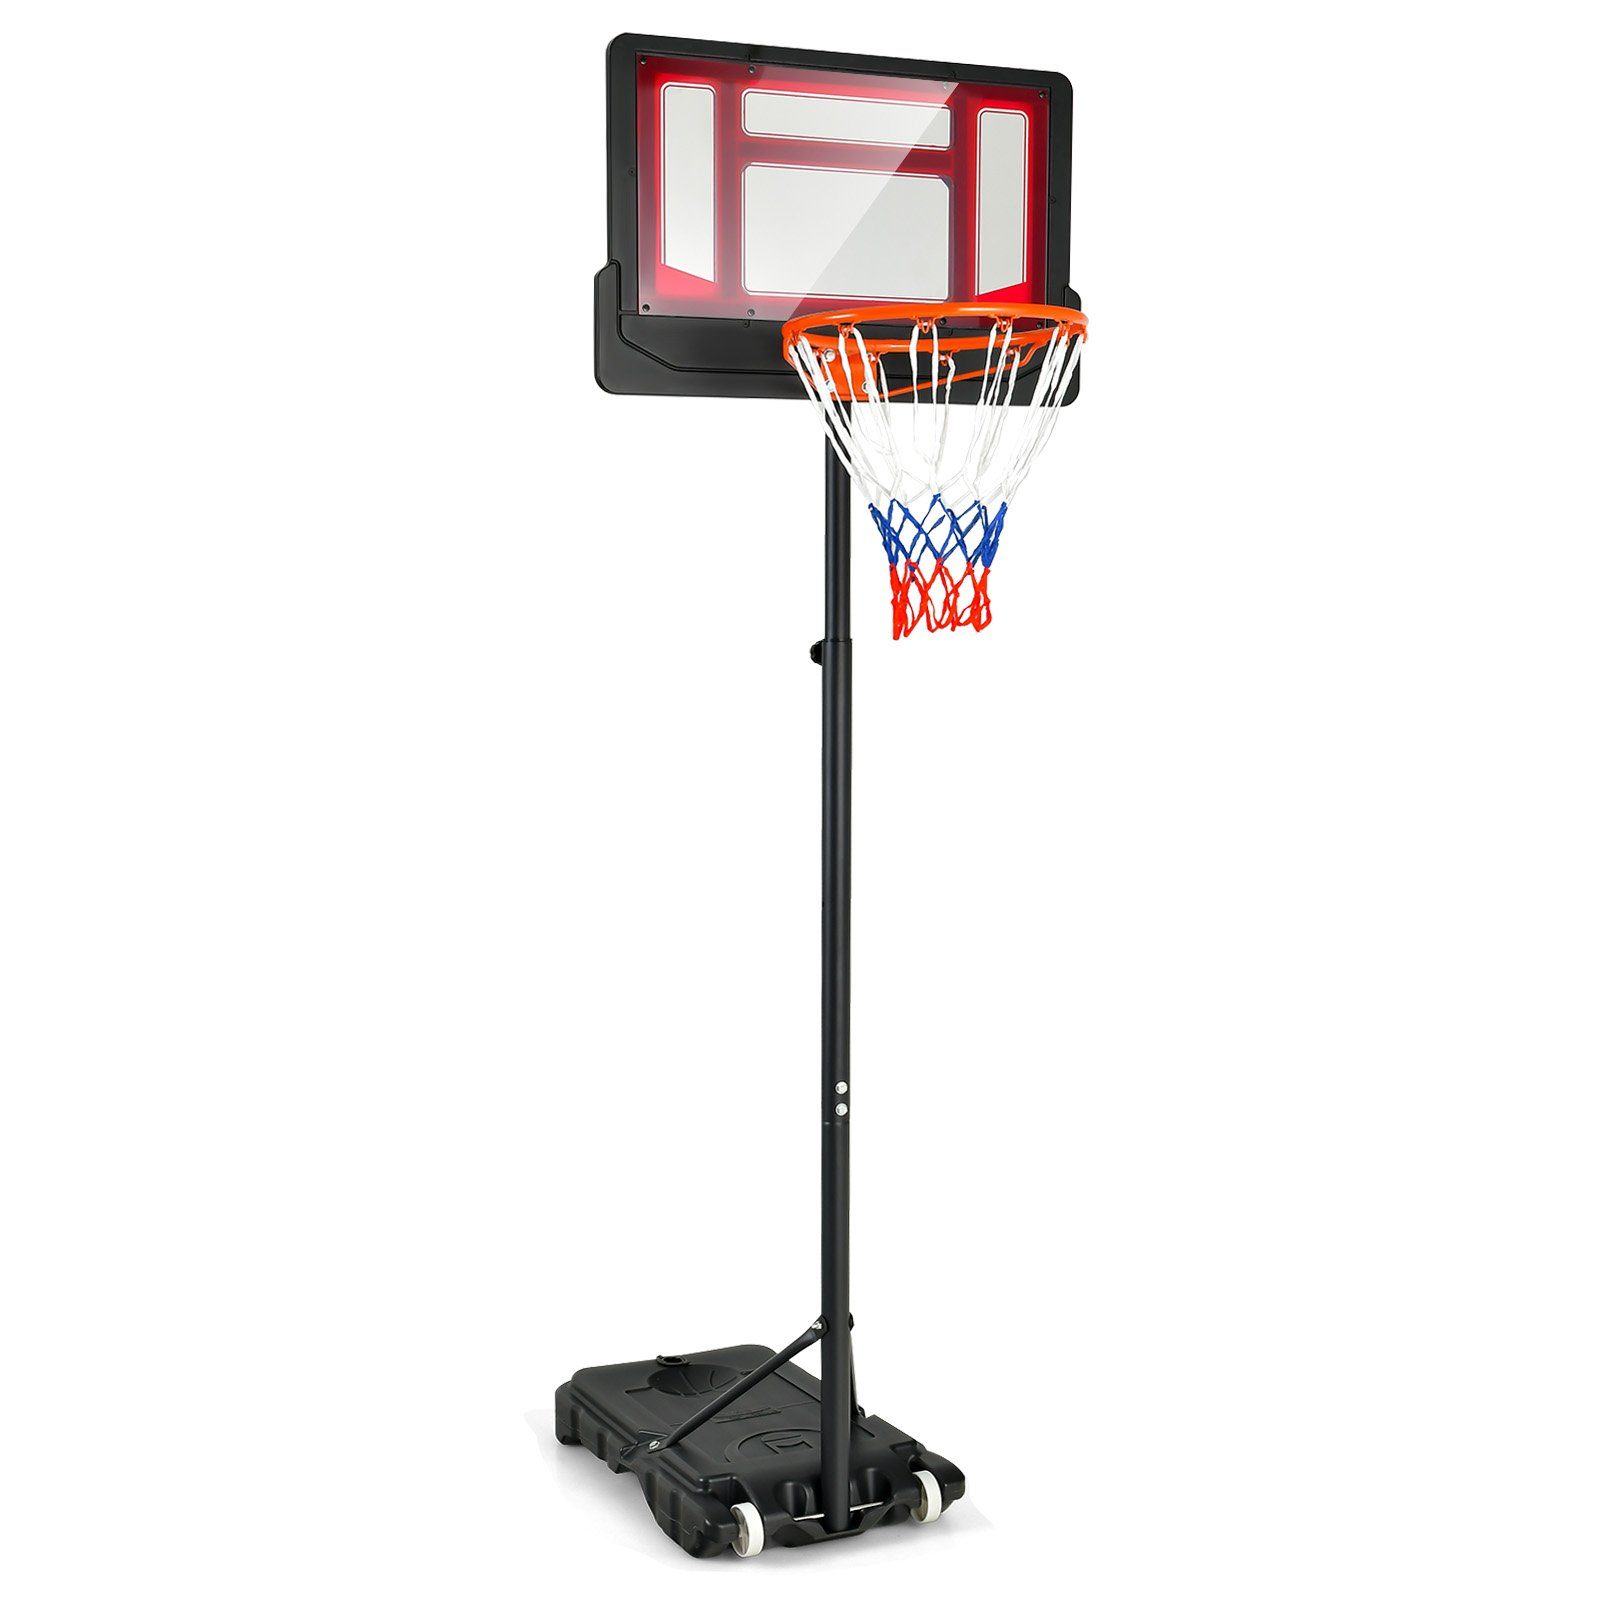 Rädern COSTWAY 90-210cm höhenverstellbar, Basketballkorb, Basketballständer